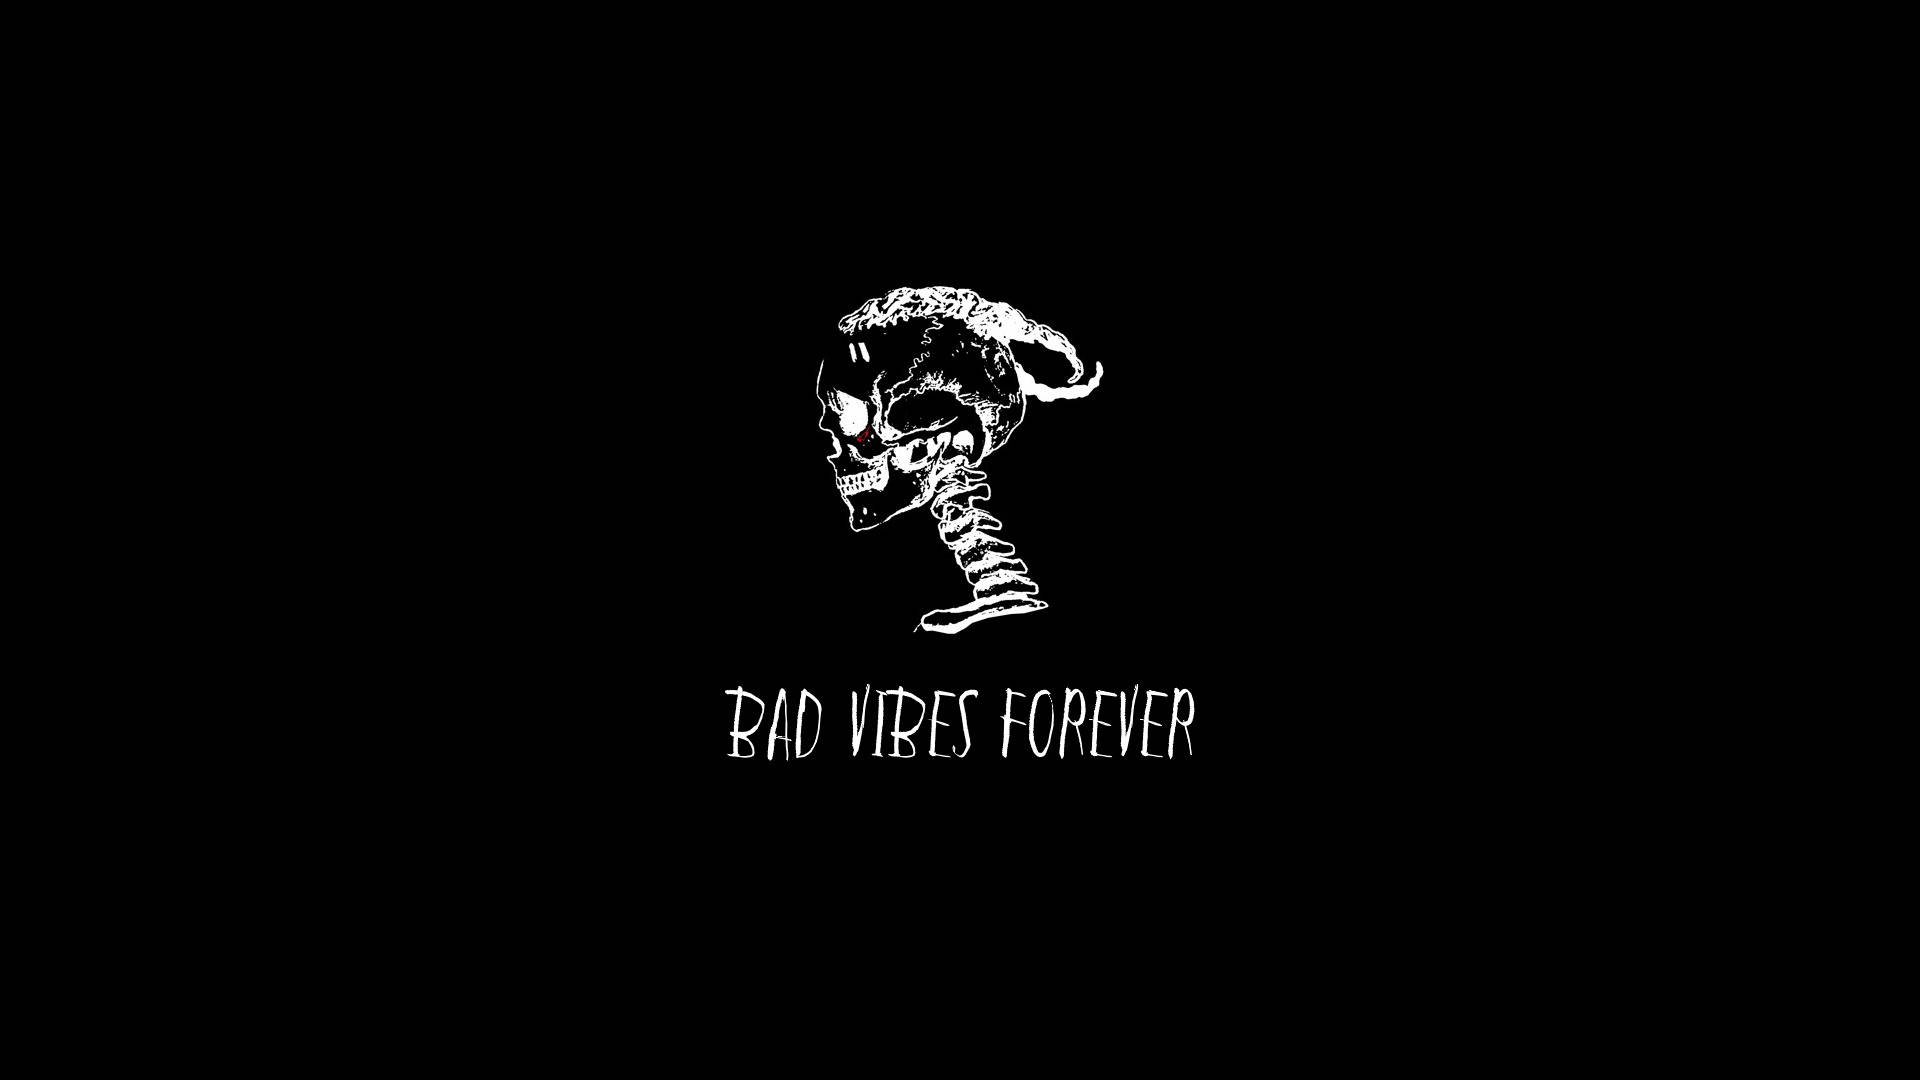 Xx Tentacion Bad Vibes Forever